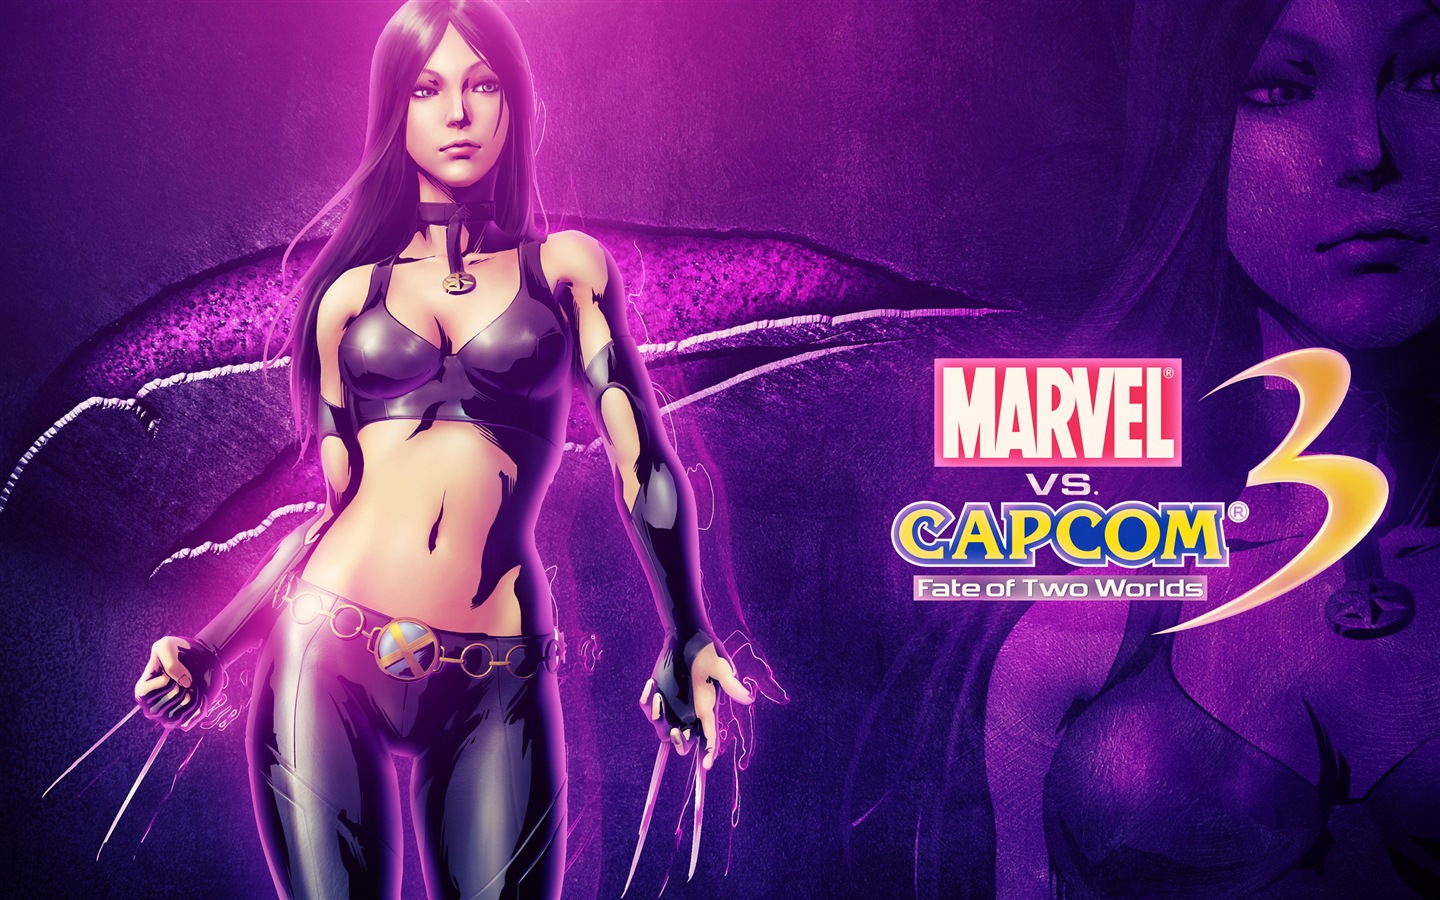 Marvel VS. Capcom 3: Fate of Two Worlds 漫畫英雄VS.卡普空3 高清遊戲壁紙 #10 - 1440x900